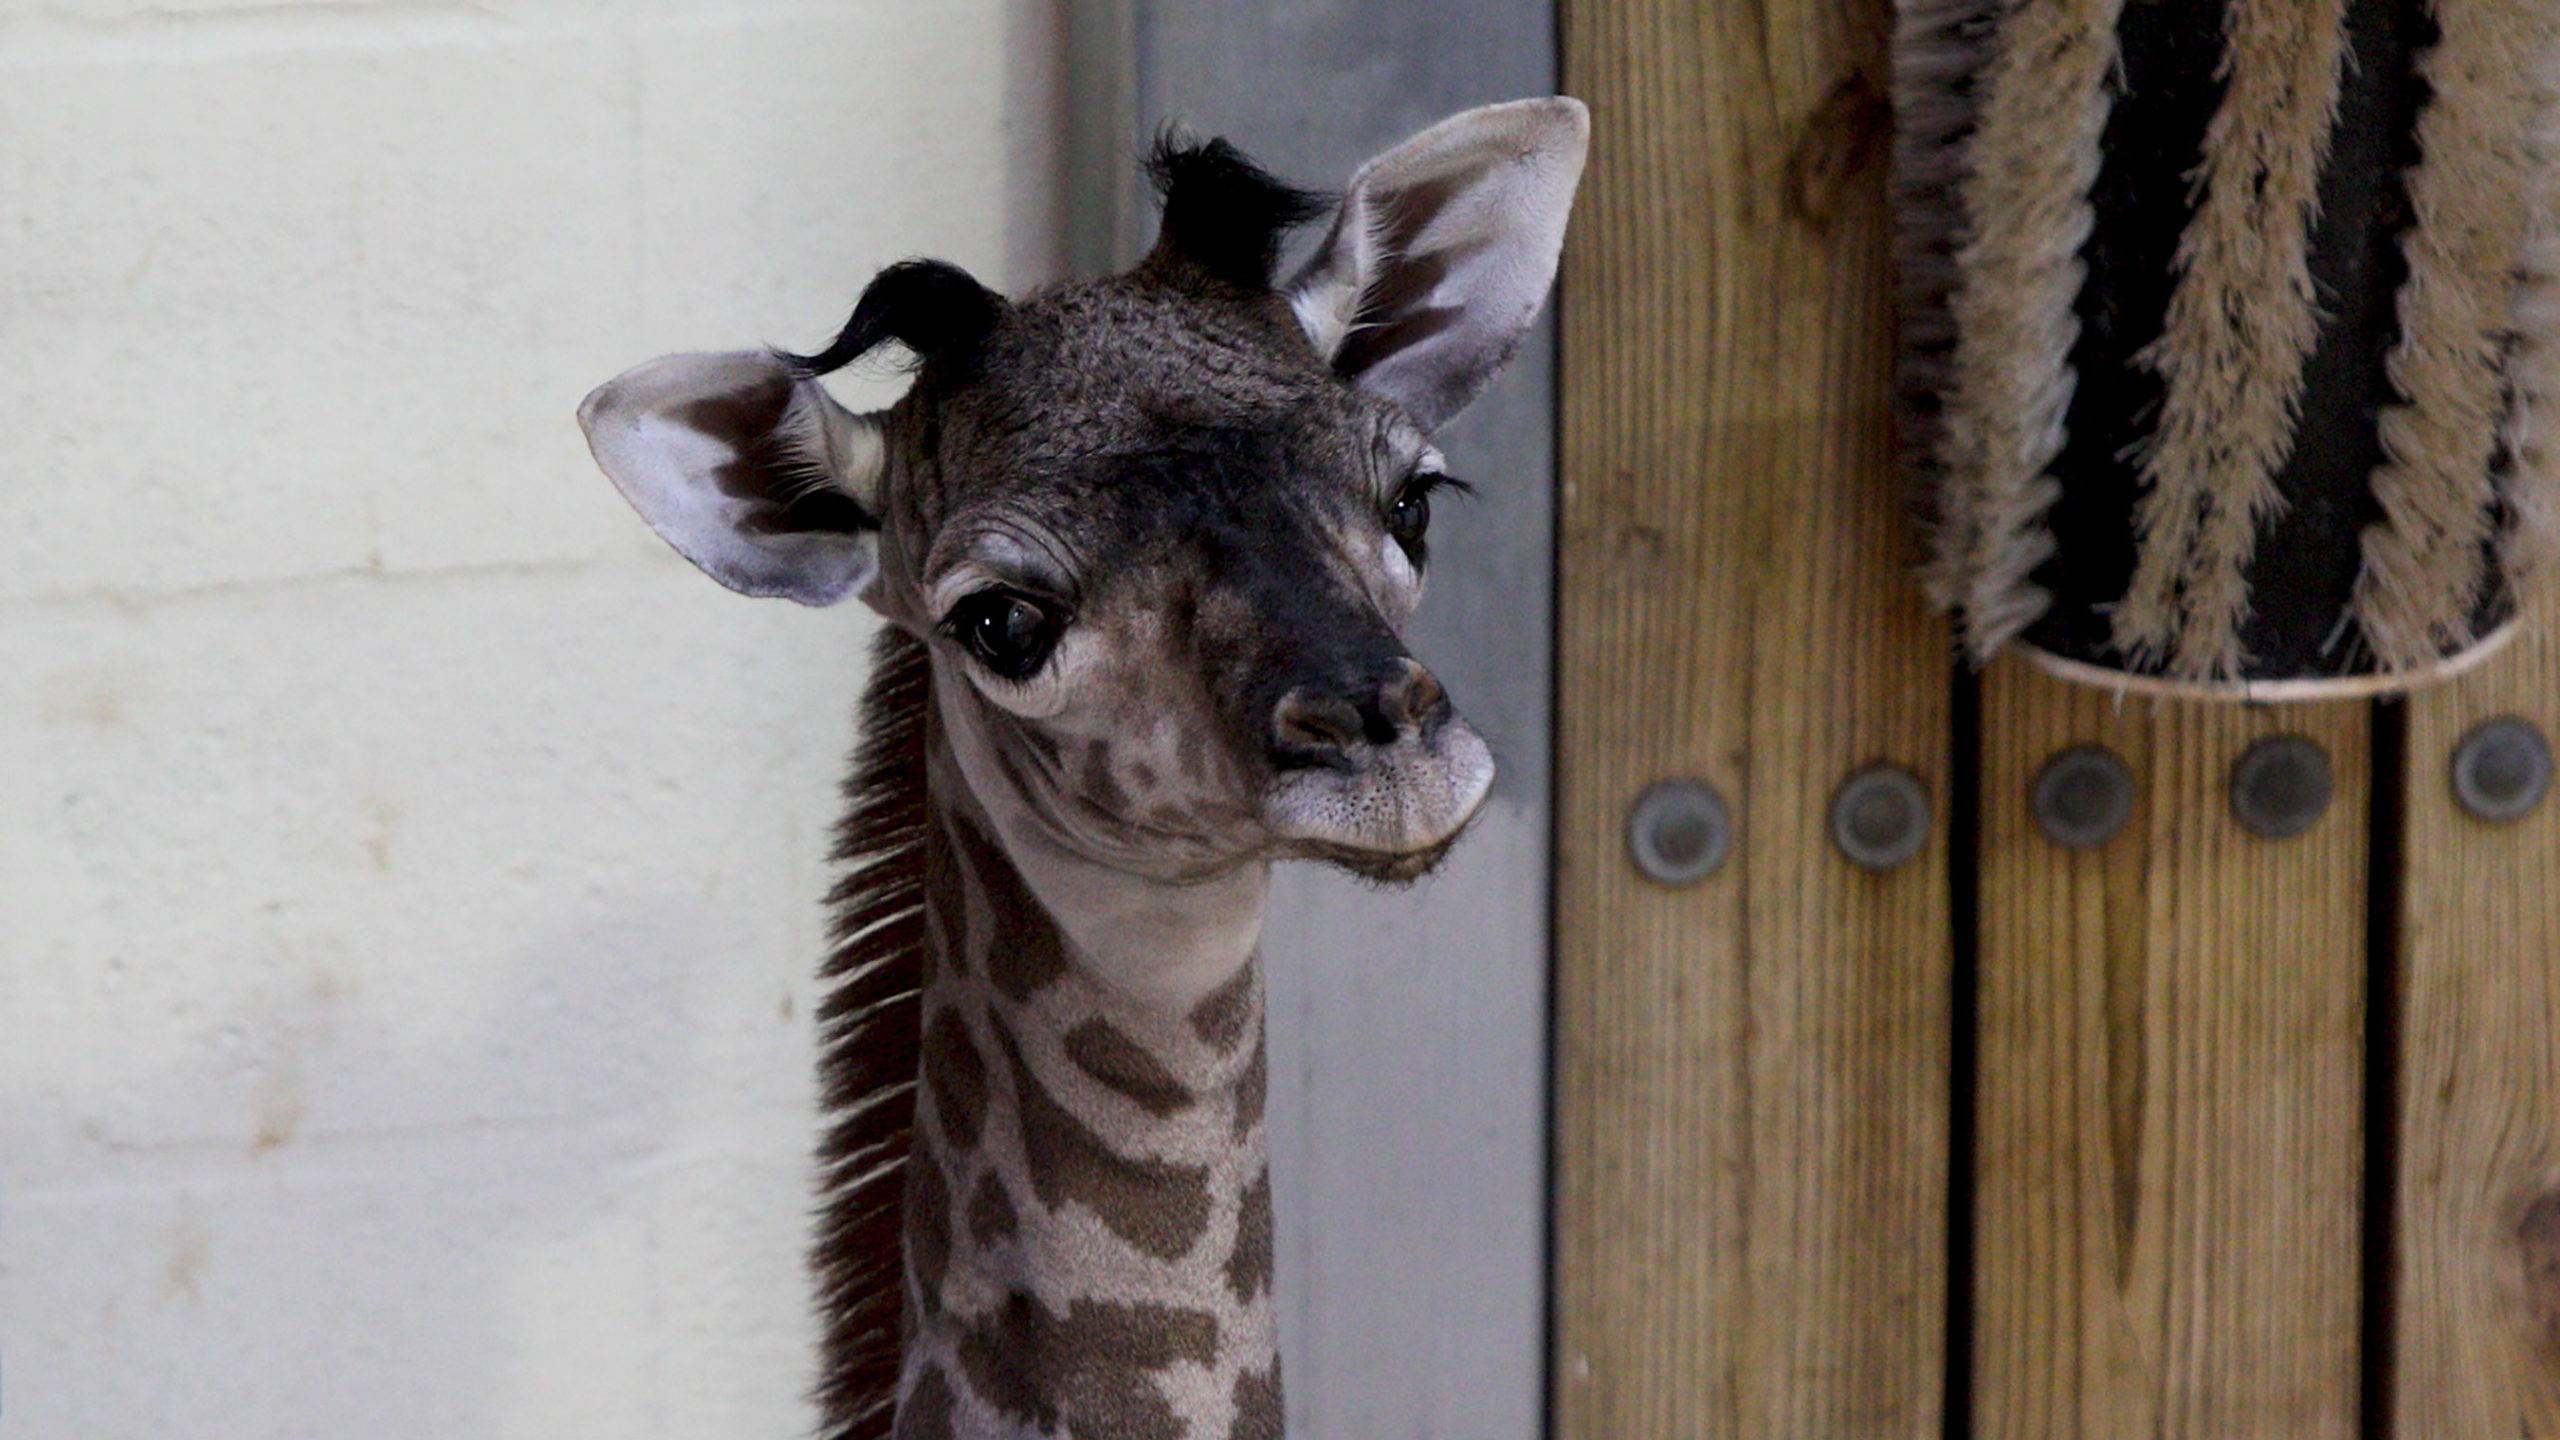 PHOTO - Masai giraffe born this week at Disney's Animal Kingdom